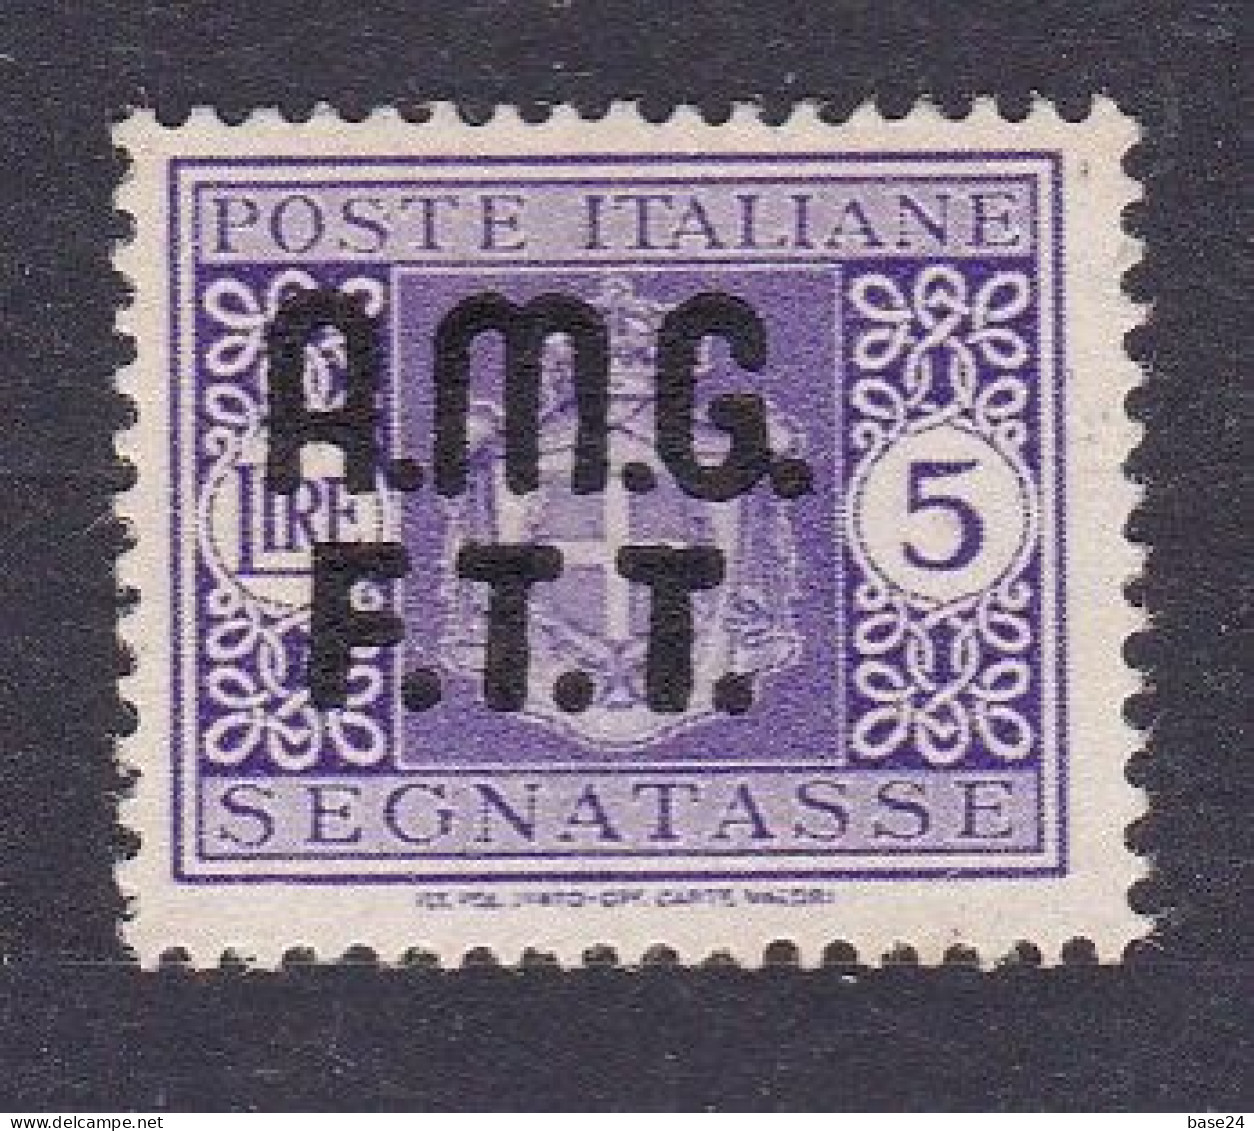 1947 Italia Italy Trieste A SEGNATASSE 4A  POSTAGE DUE 5 Lire Violetto Senza Filigrana MLH* Certif Biondi, Firma A.Diena - Postage Due